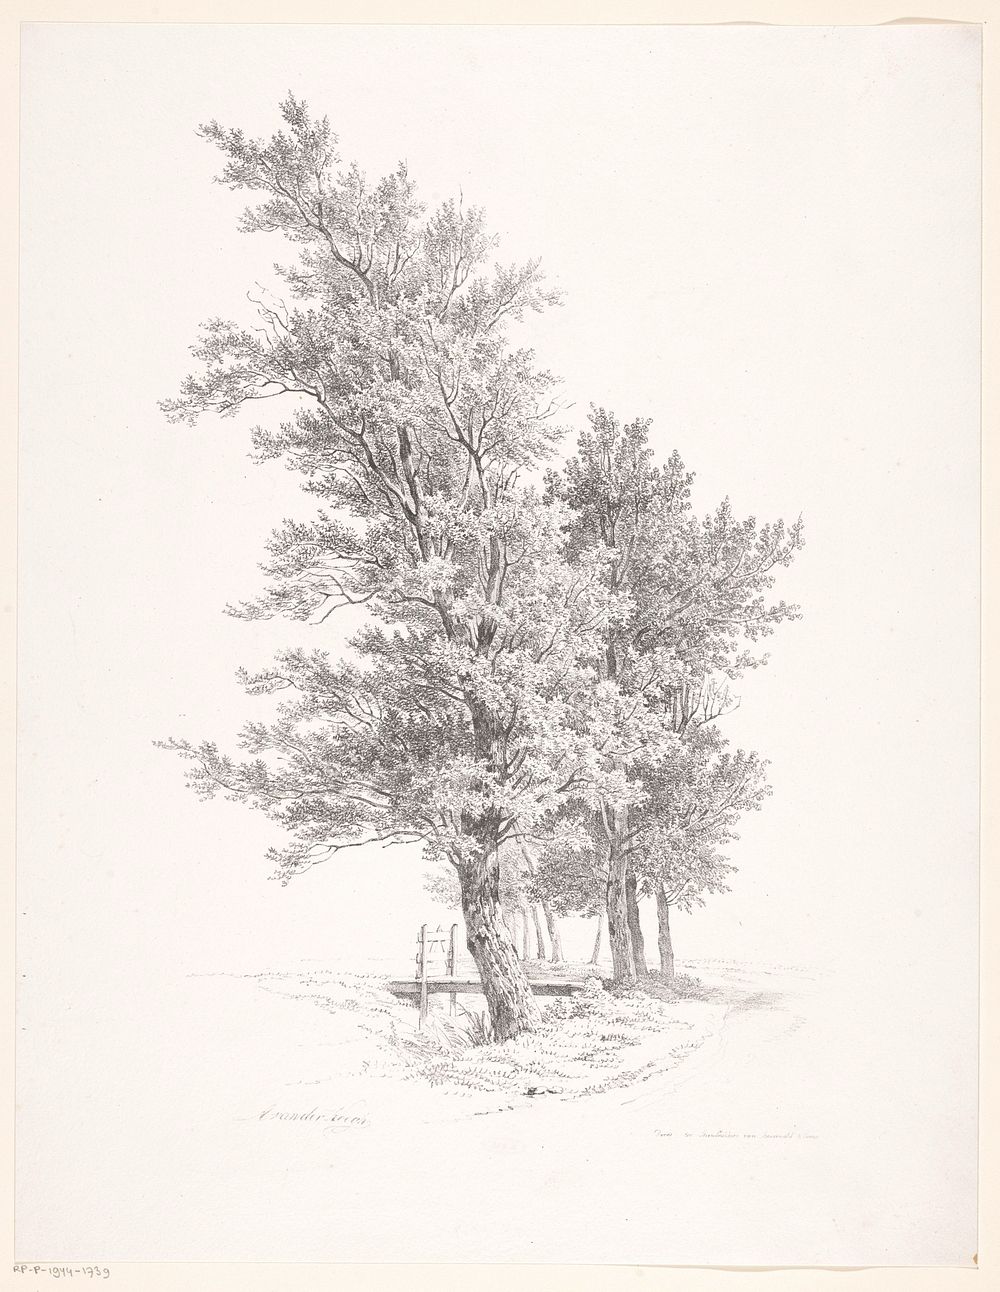 Rij bomen (1826 - 1828) by Adrianus van der Koogh and Steuerwald and Co